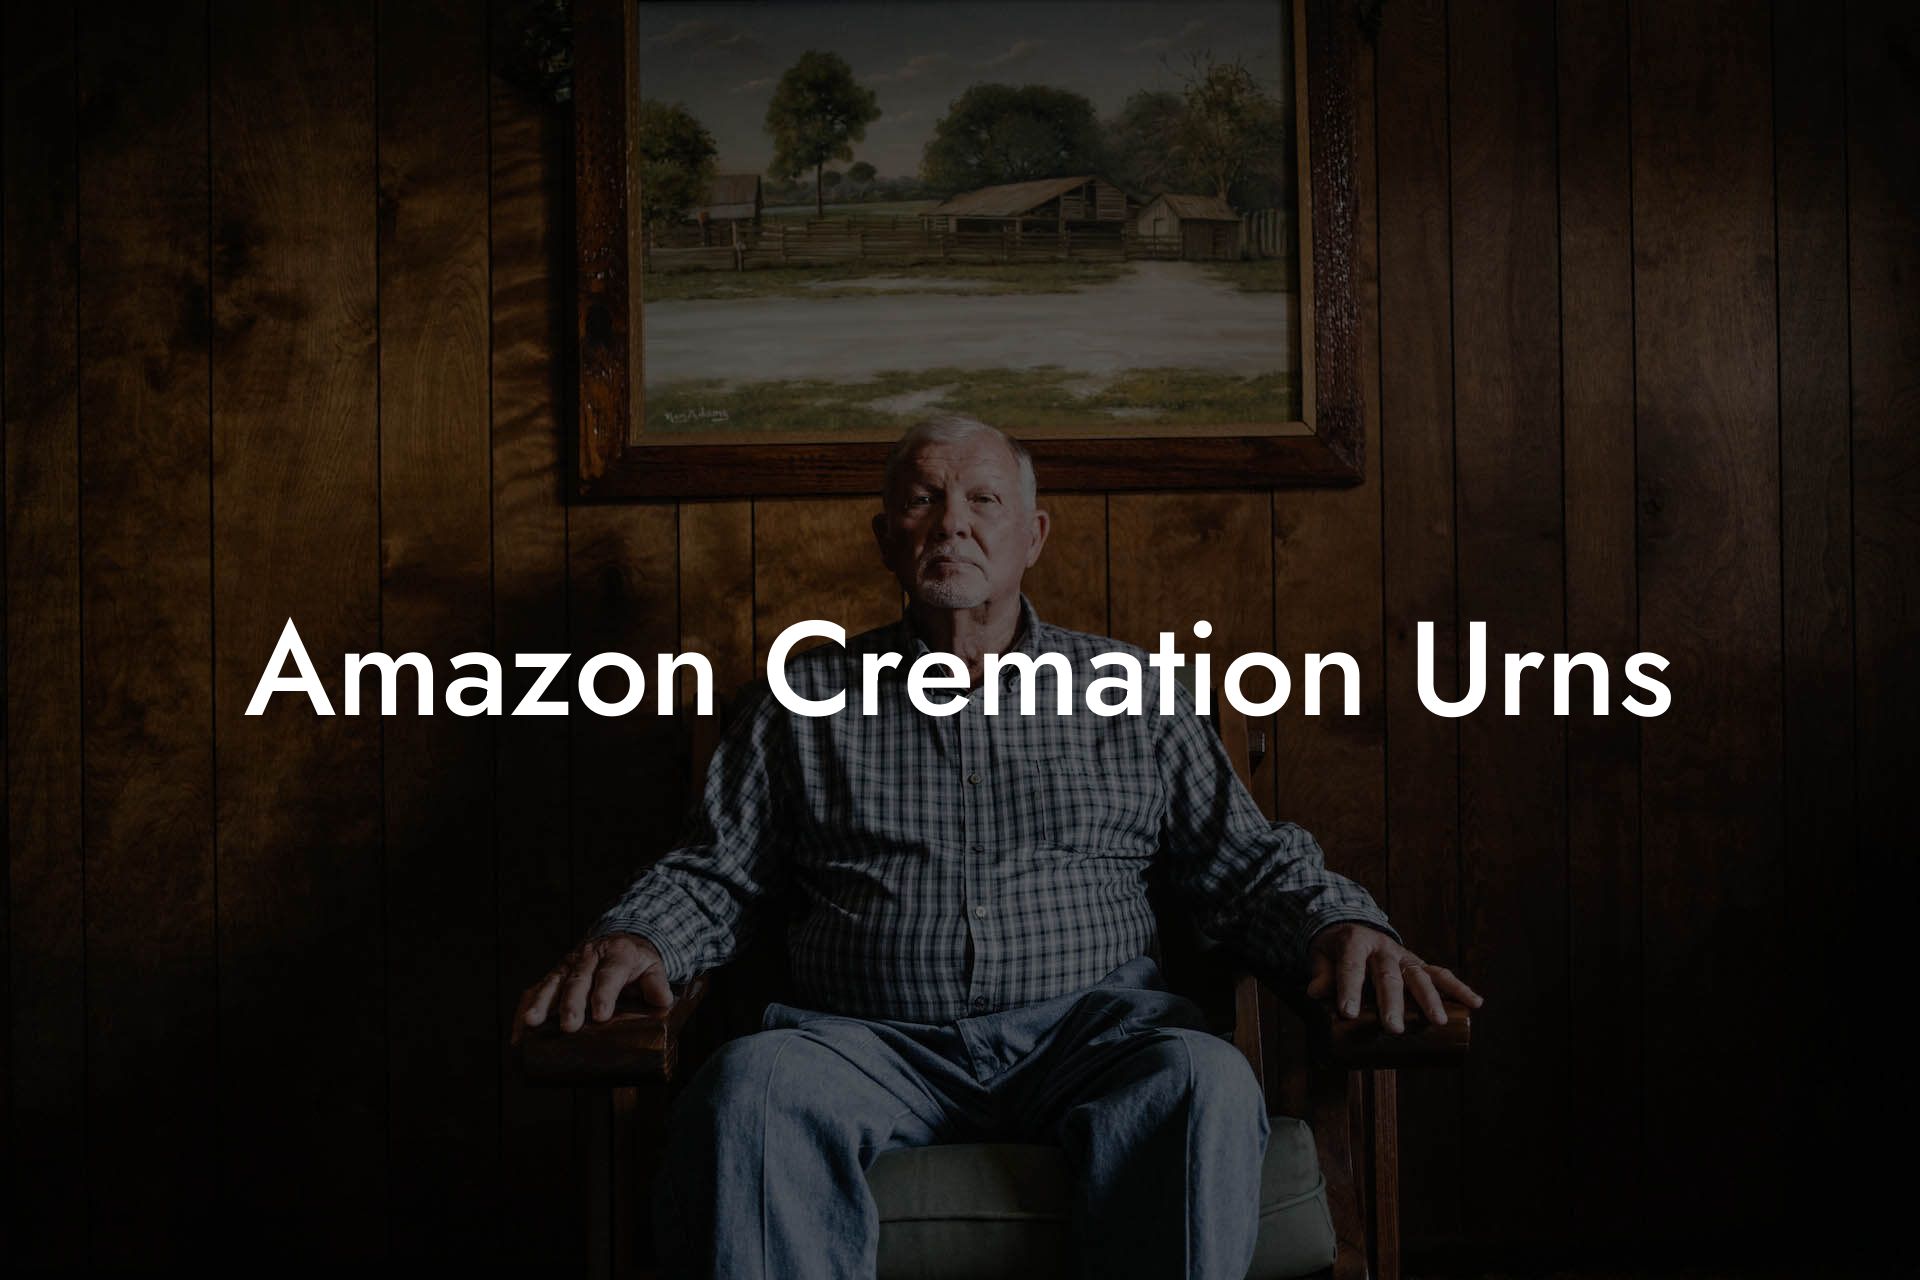 Amazon Cremation Urns